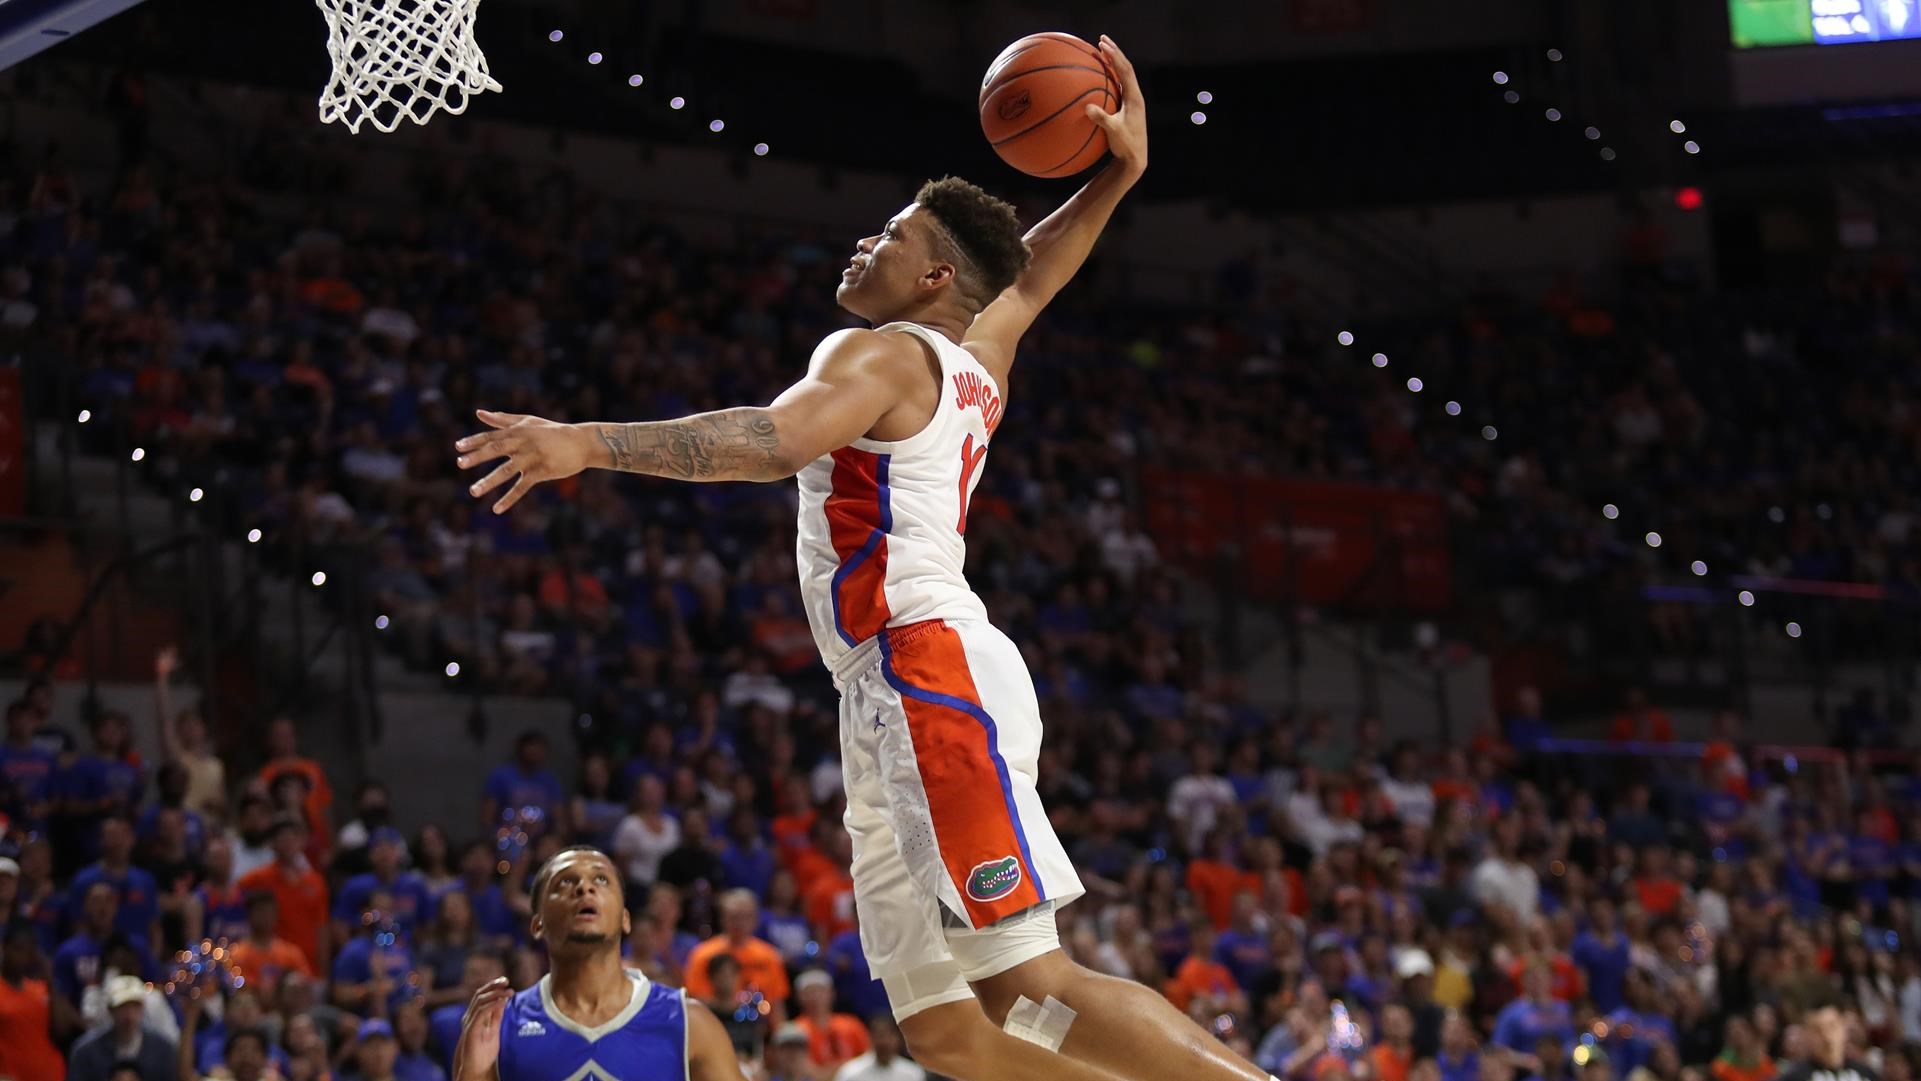 Florida basketball forward Keyontae Johnson dunks a basketball in game in the SEC